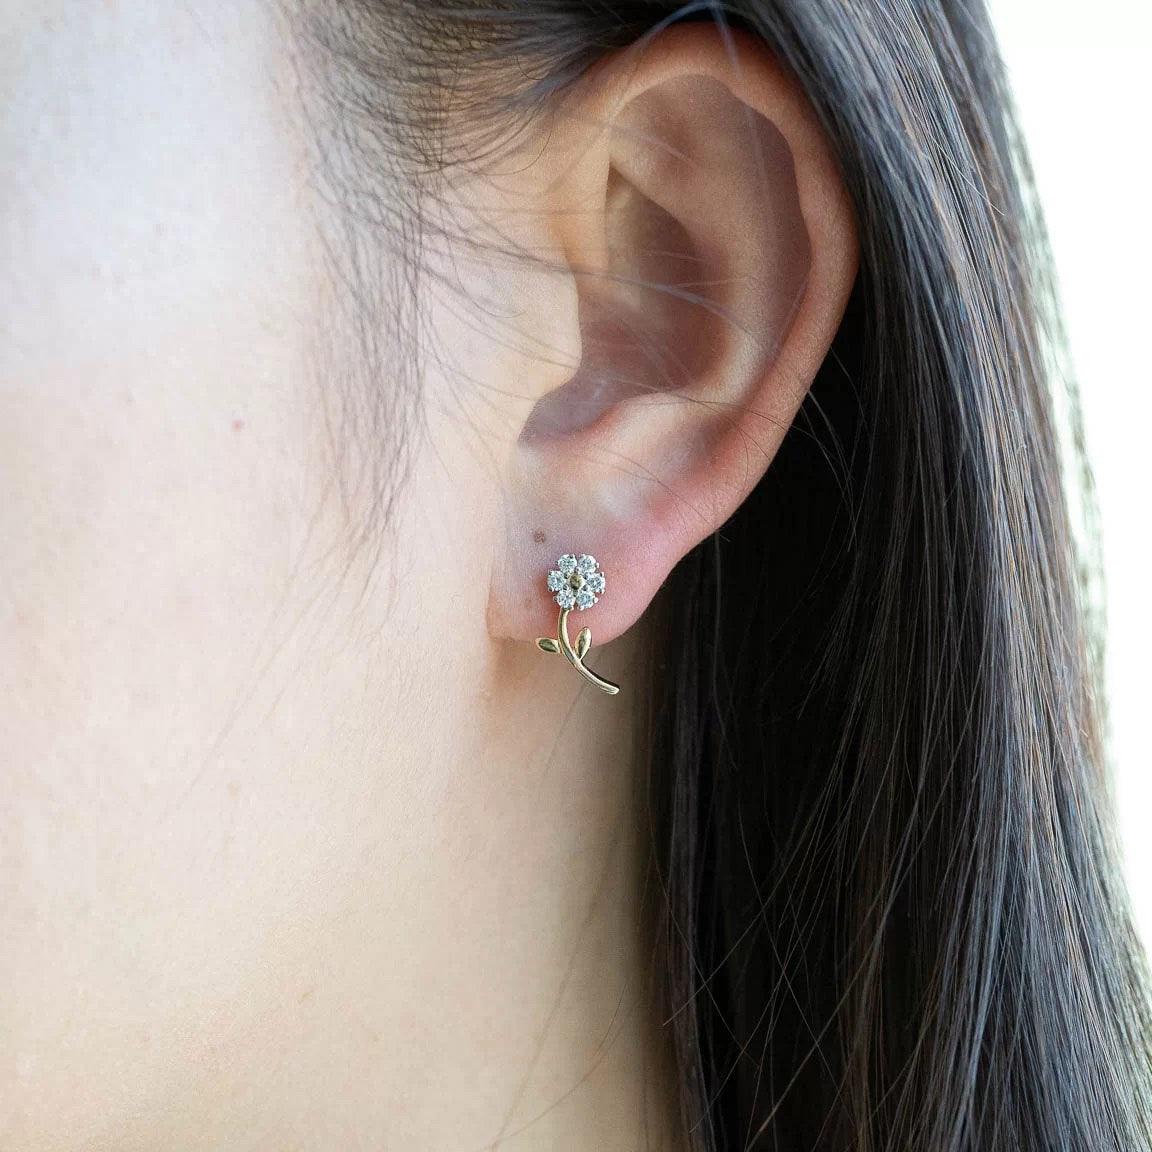 14k Gold Diamond Flower Earrings with Gold Stems - Aureli Jewelry